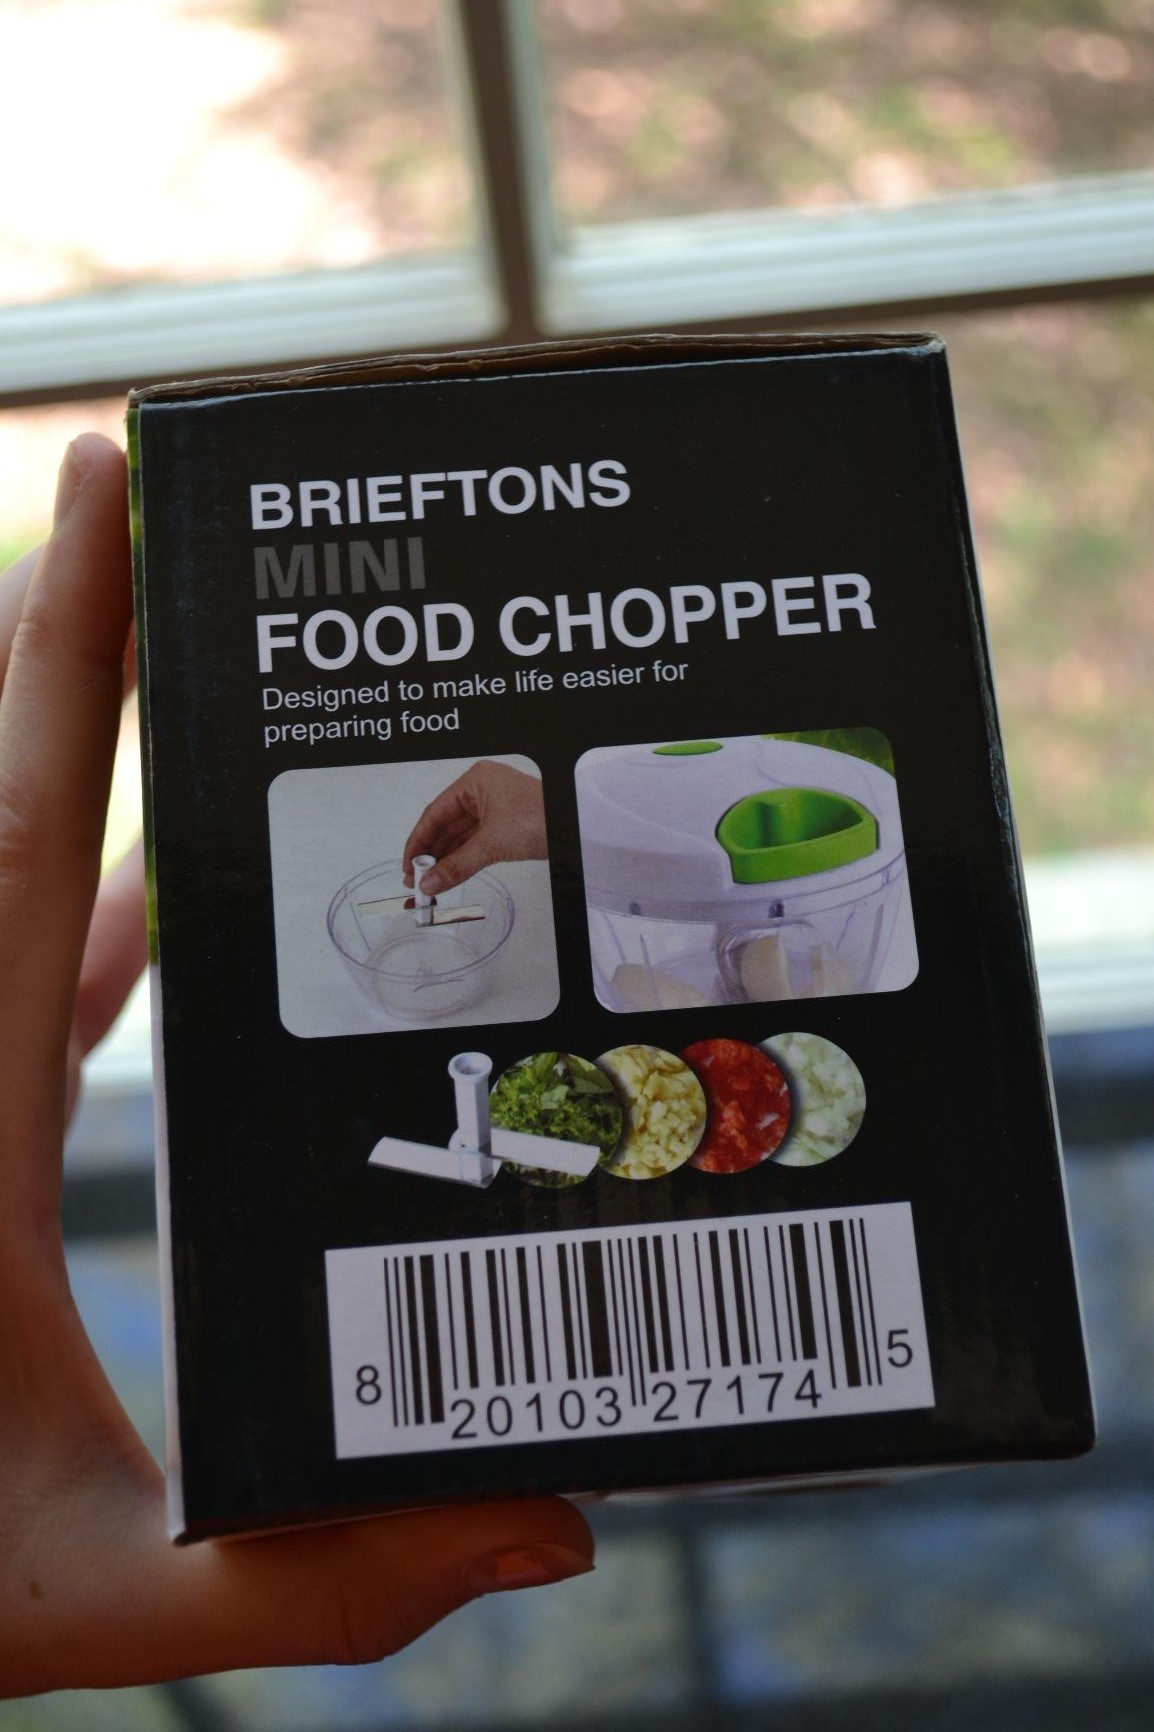 Brieftons Express Manual Food Chopper: Large 8.5-Cup, Hand Chopper Vegetable Cutter to Chop Veggies, Fruits, Herbs, Garlic Onion Chopper for Salsa, SA